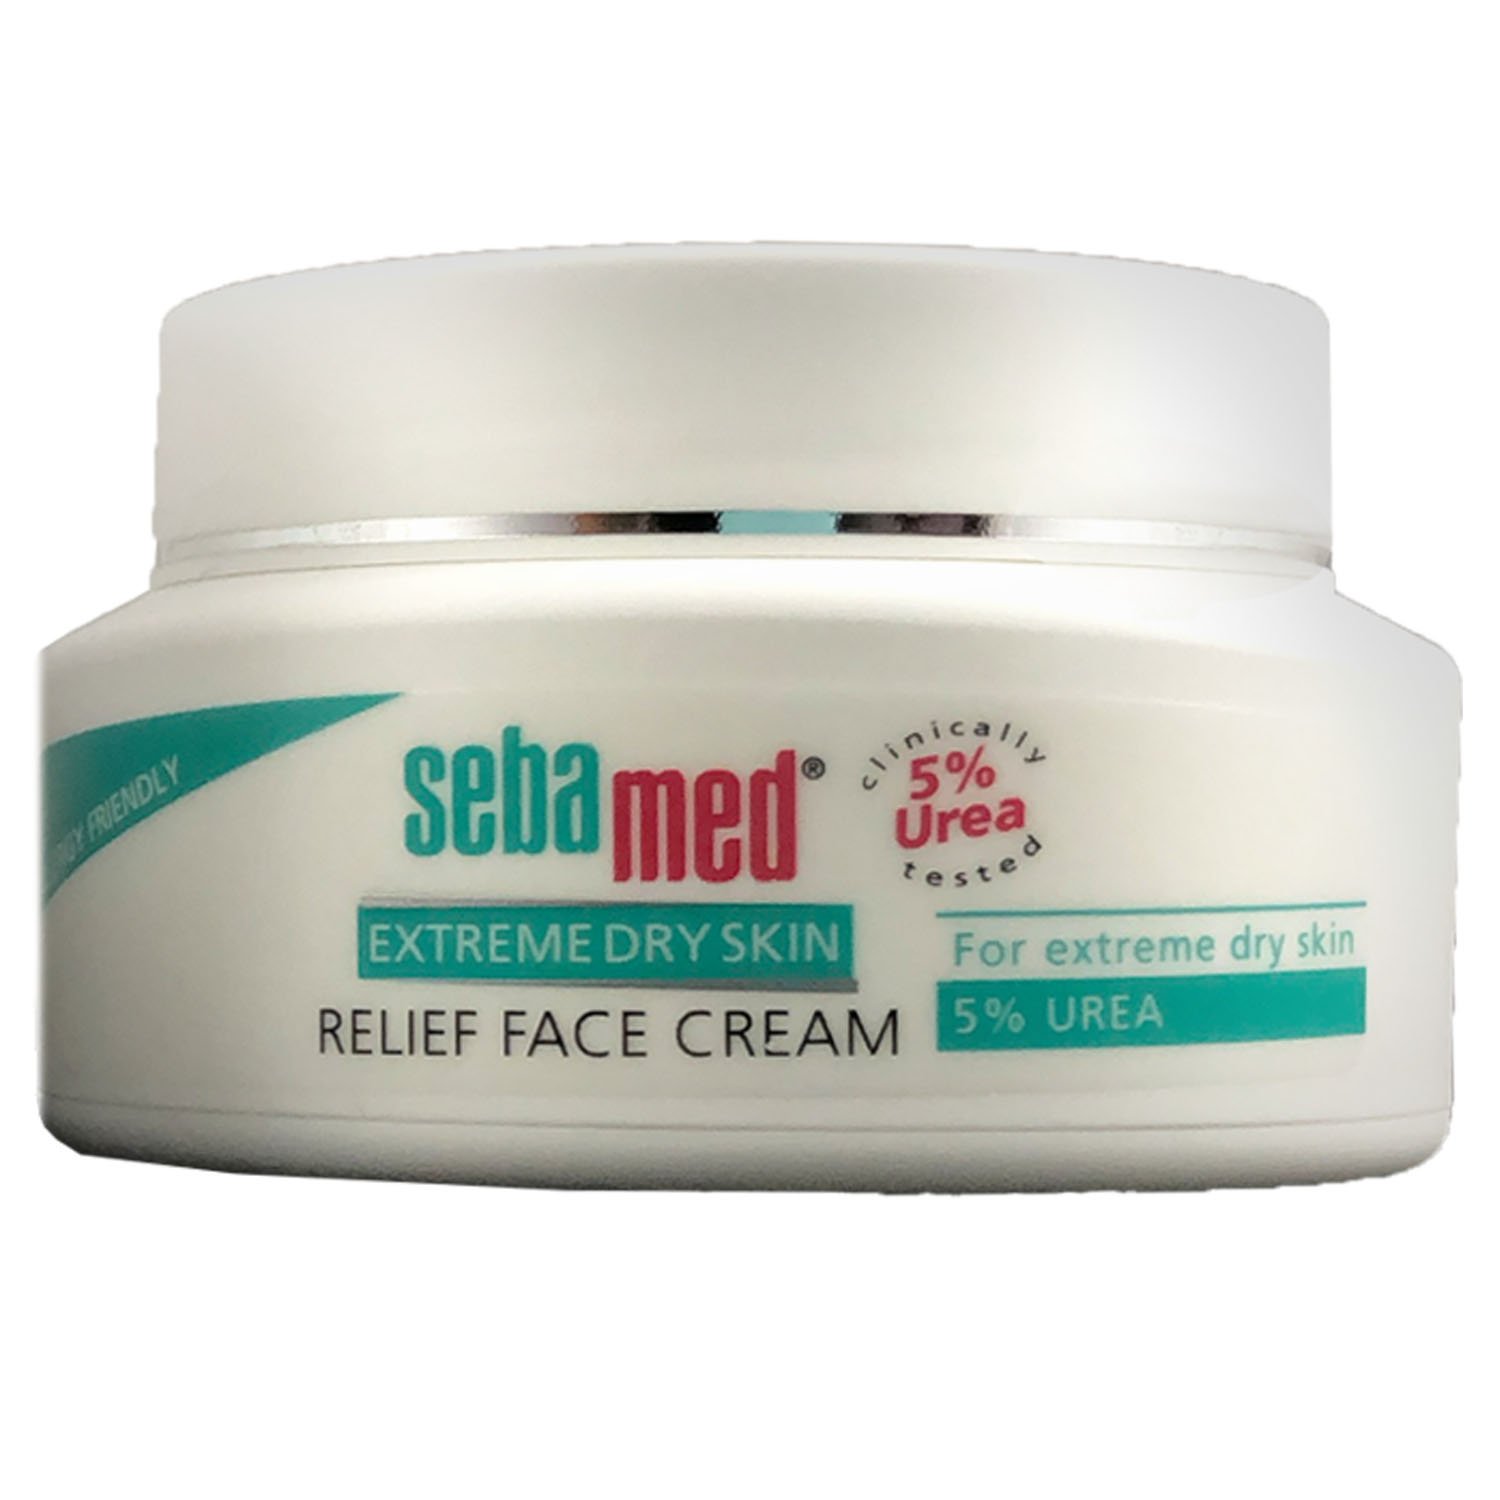 Крем Sebamed Extreme Dry Skin для очень сухой кожи лица 5%, 50 мл - фото 1